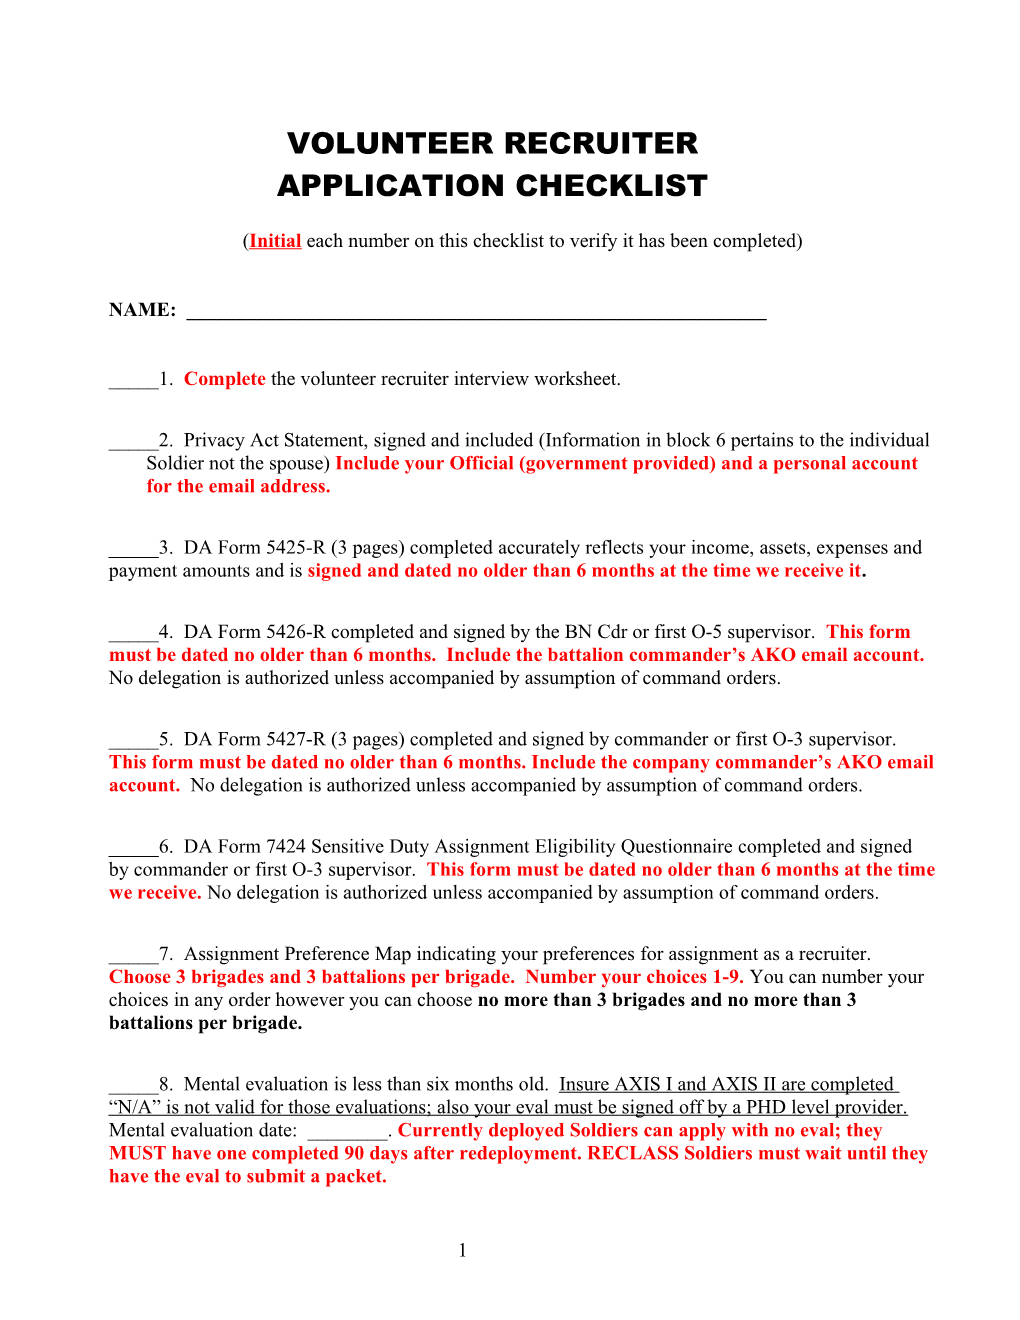 Volunteer Recruiter Application Checklist